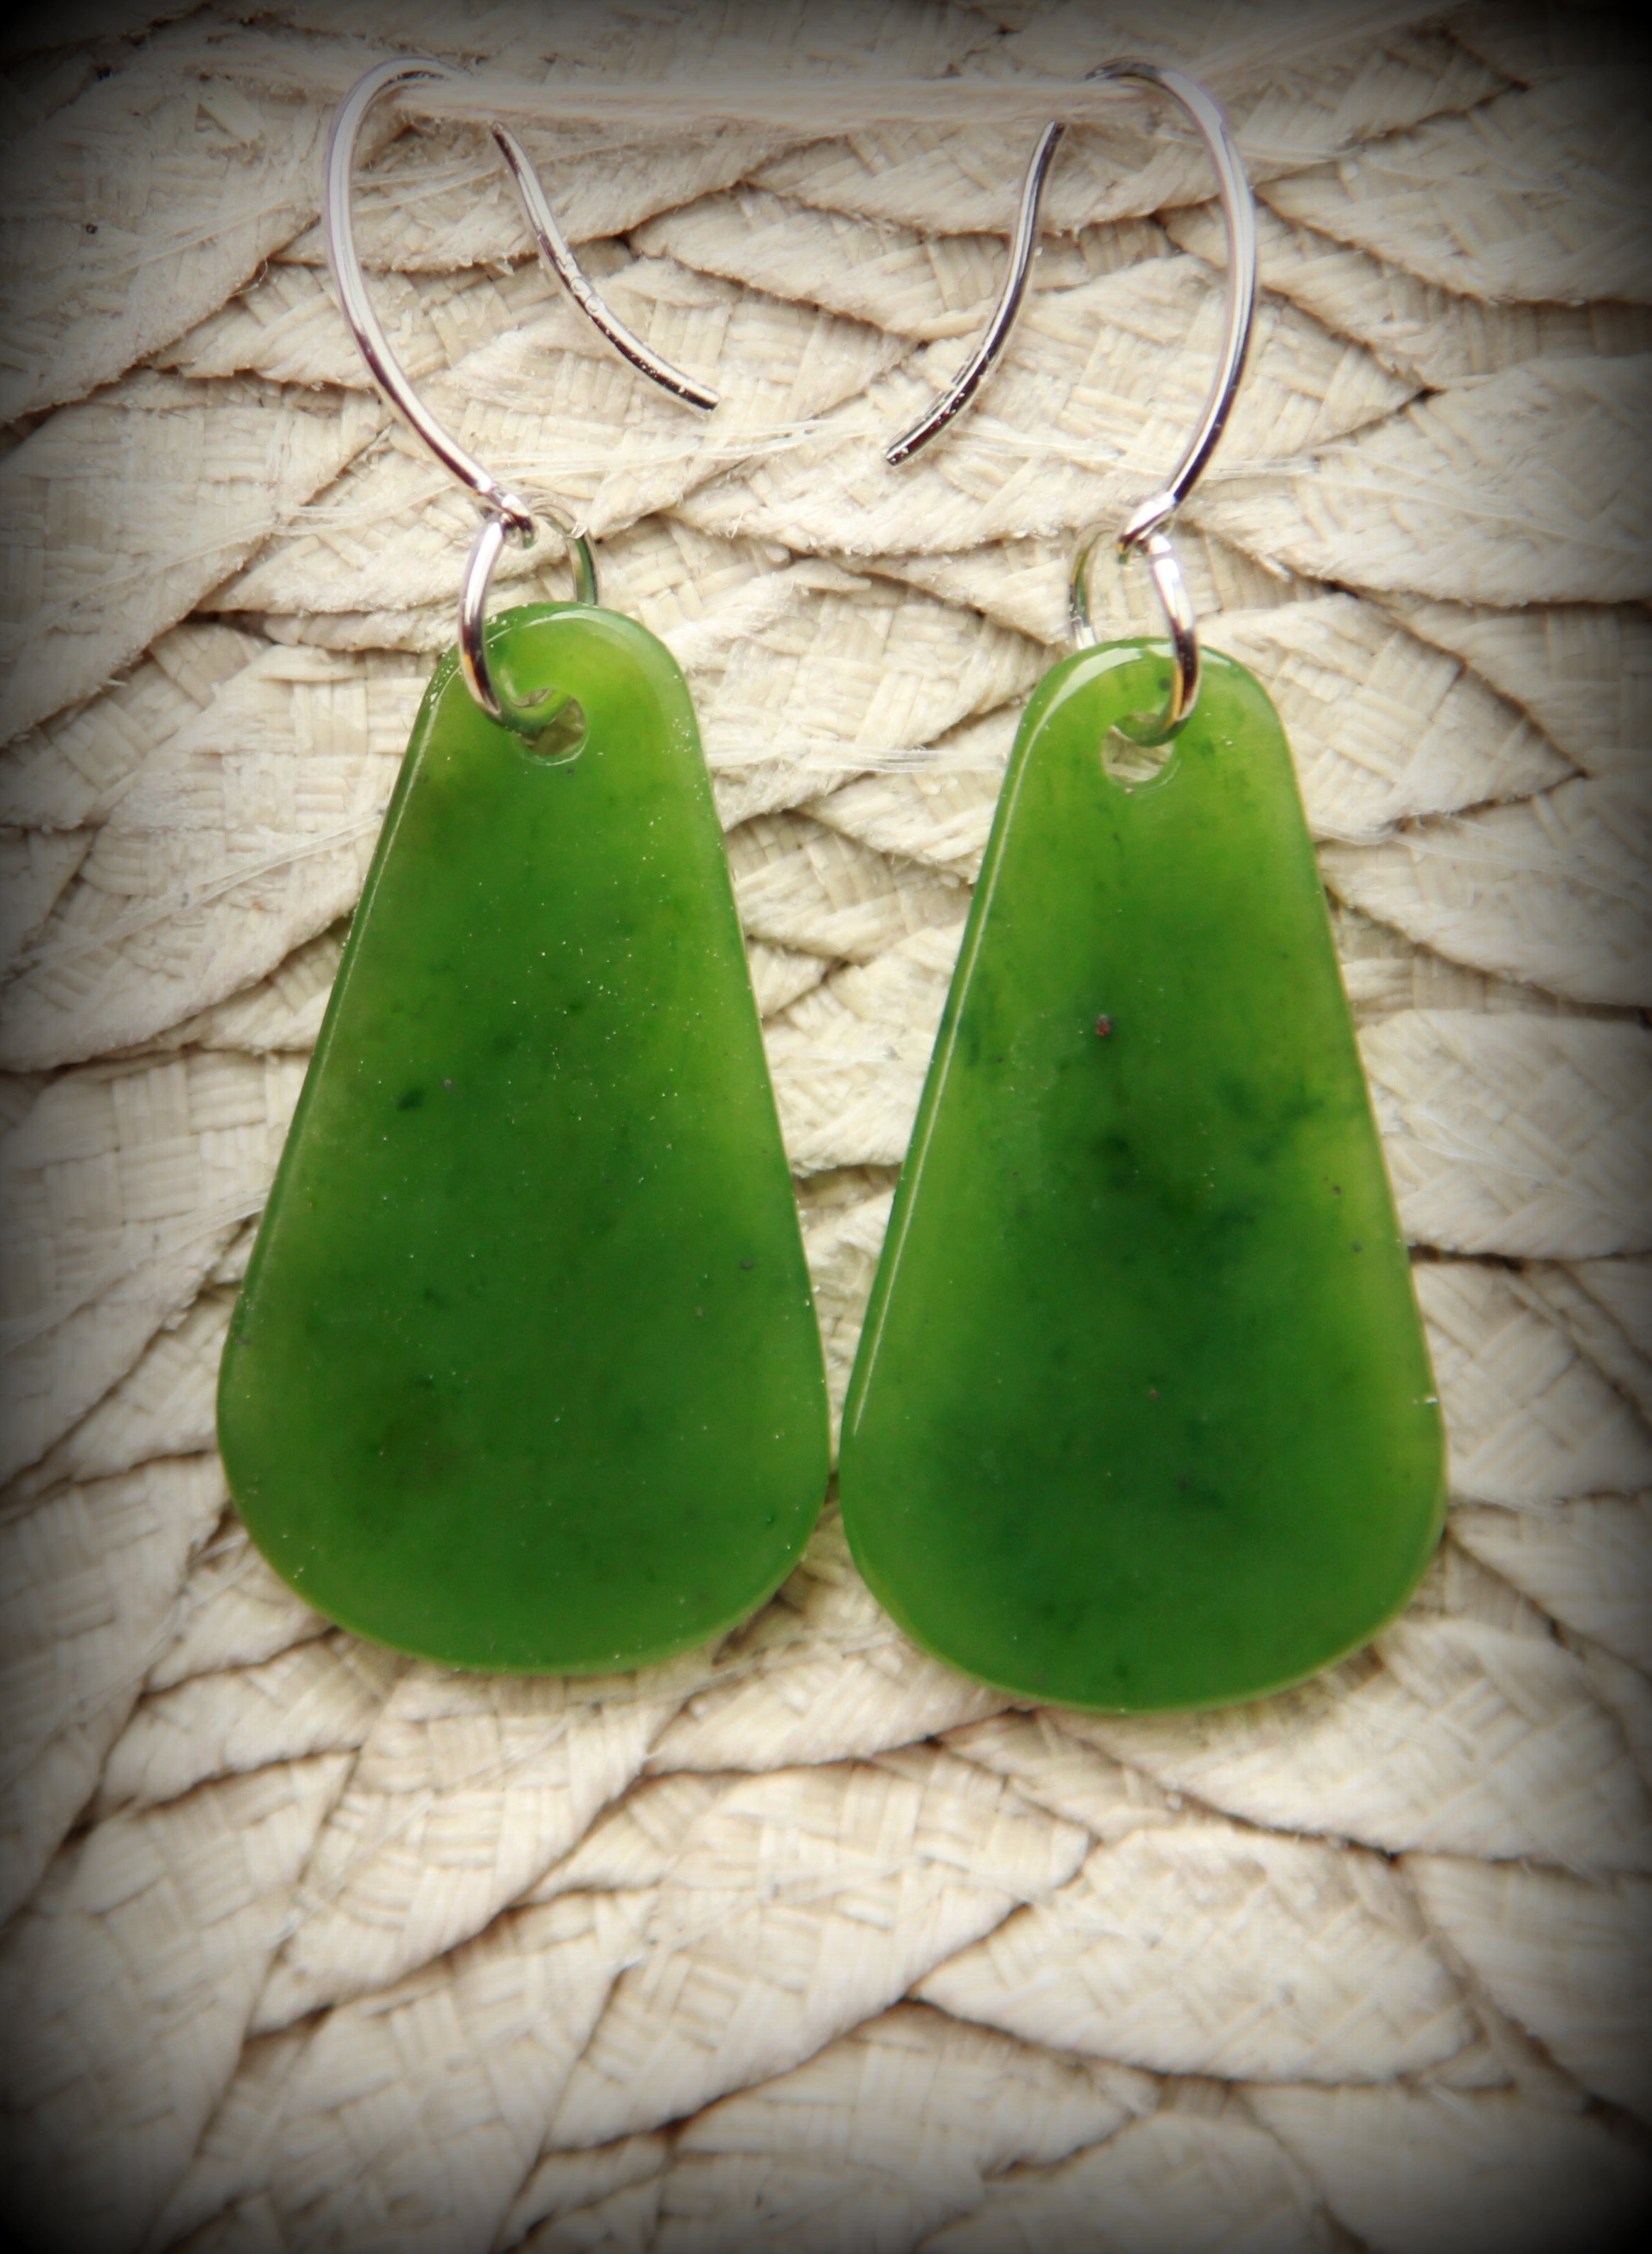 Greenstone Earrings item #7341